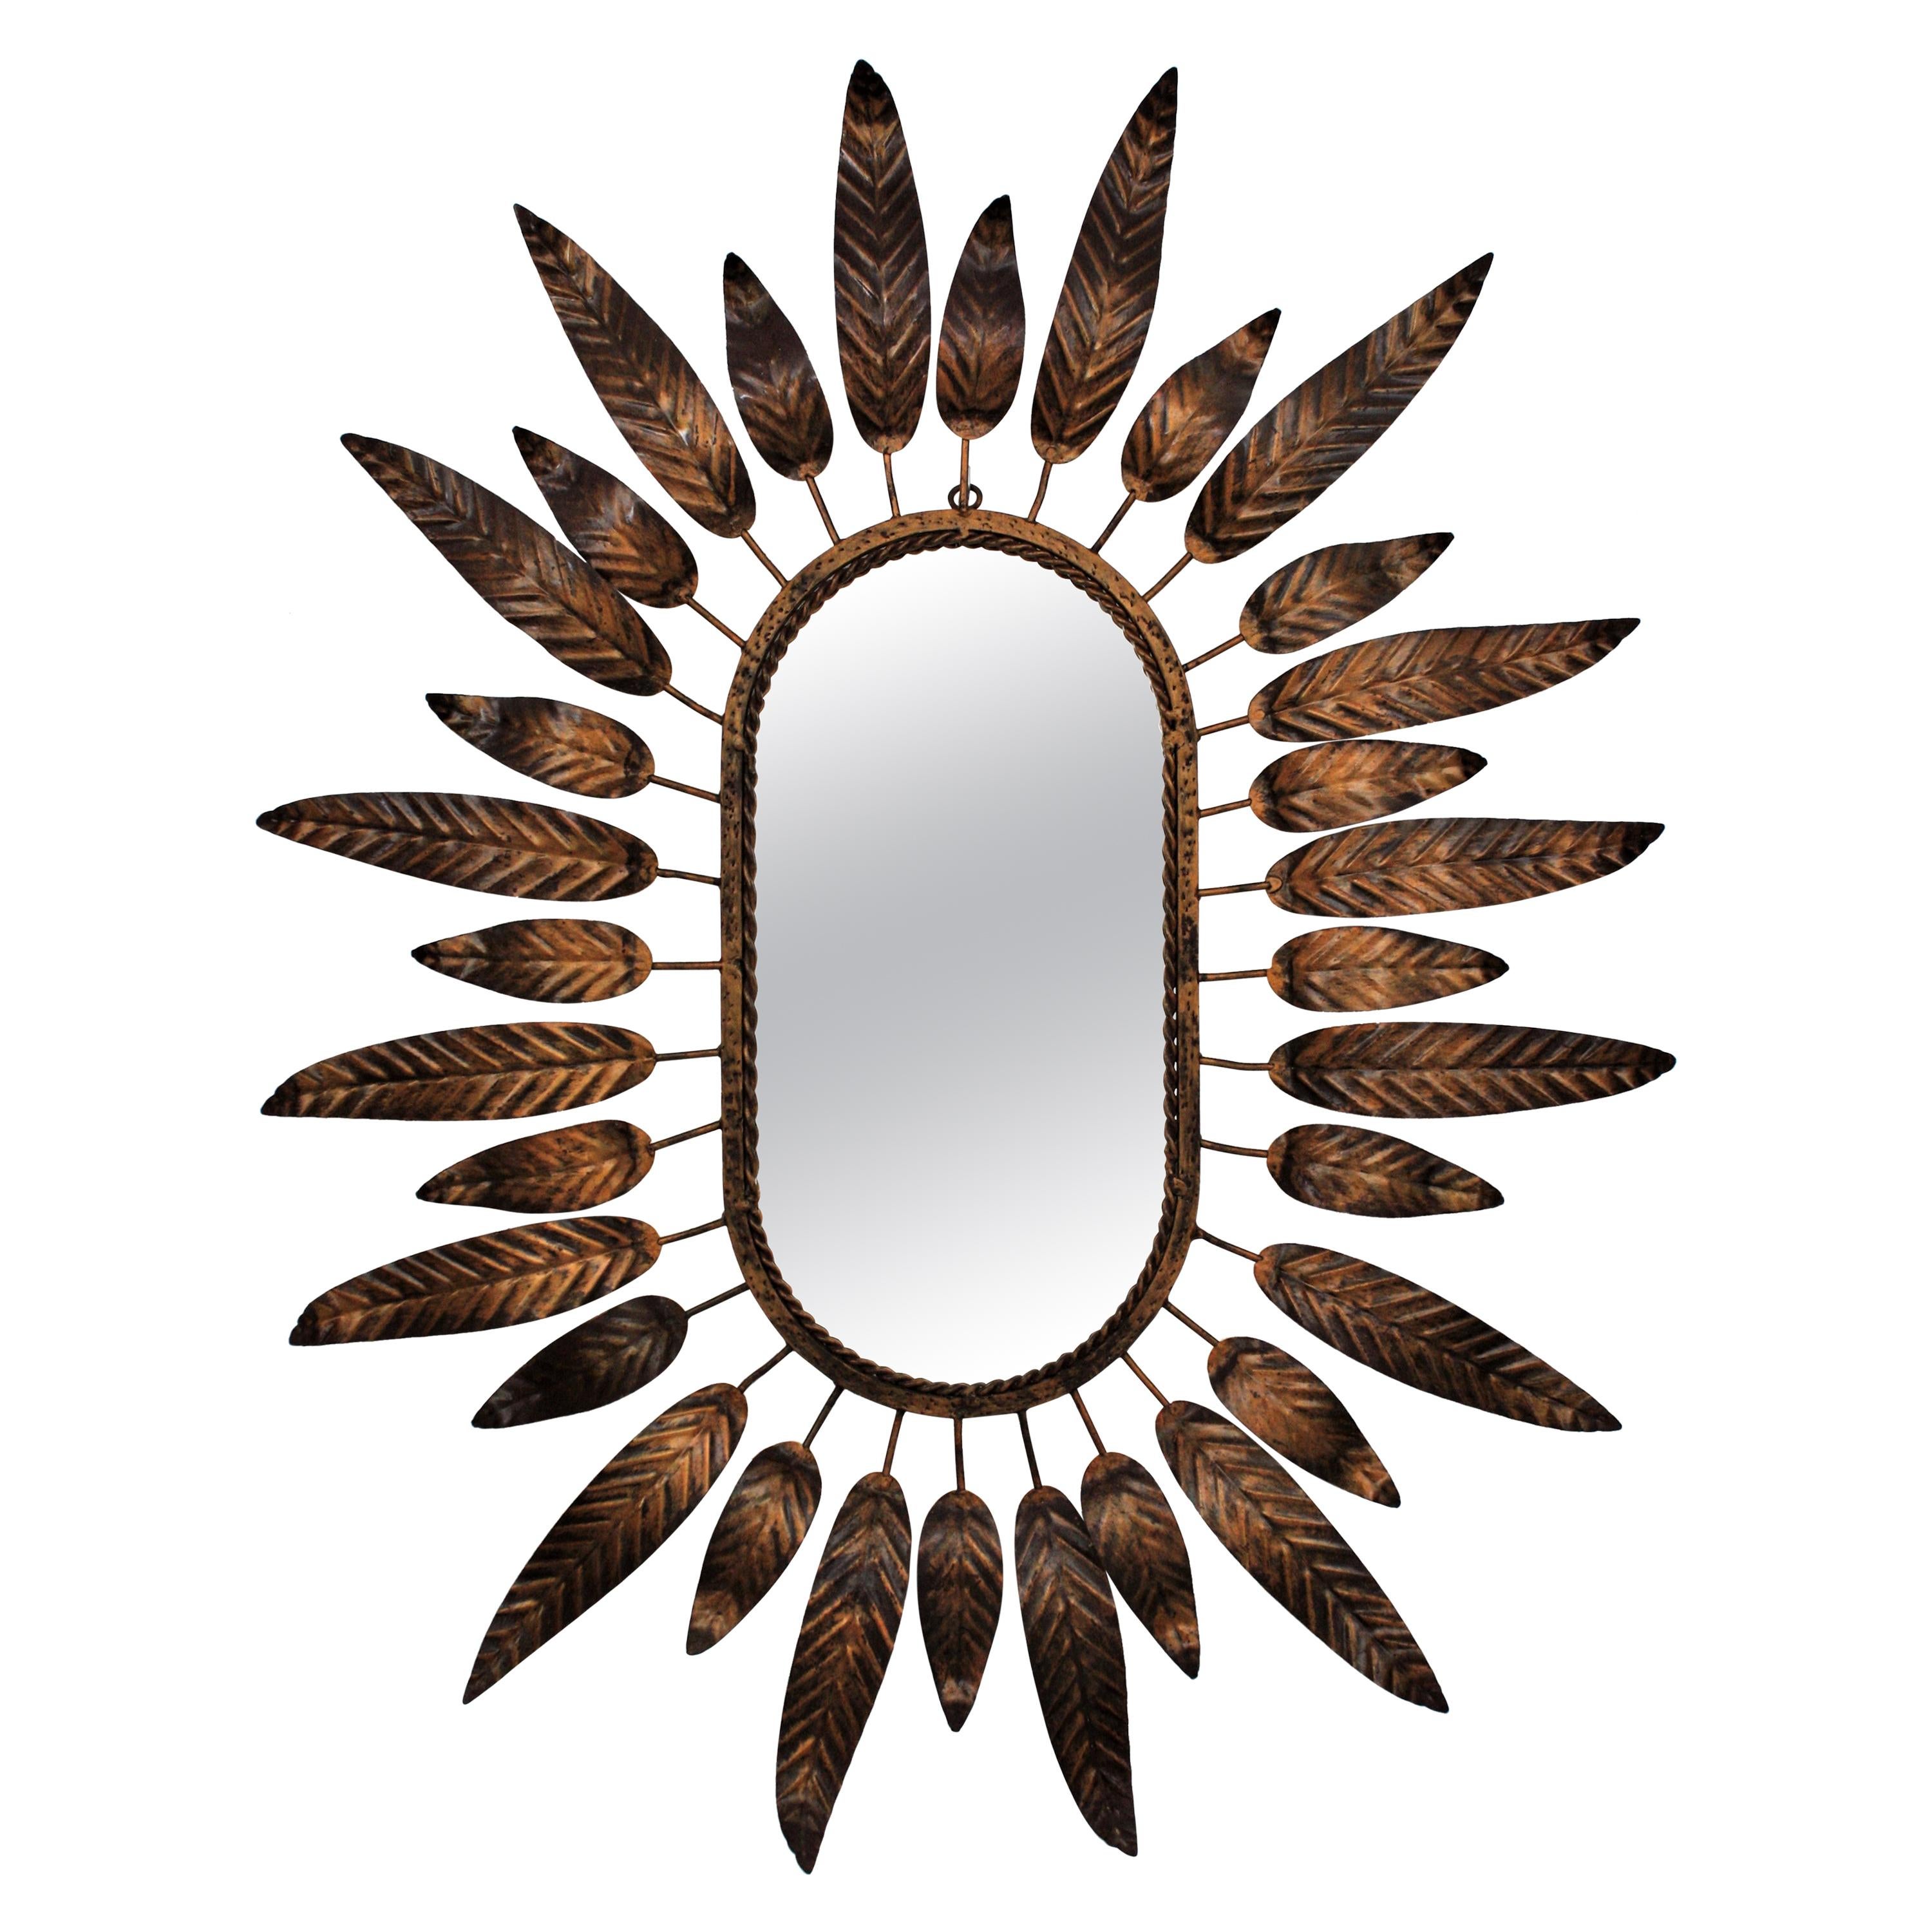 Sunburst Oval Mirror with Leafed Frame in Bronze Gilt Metal